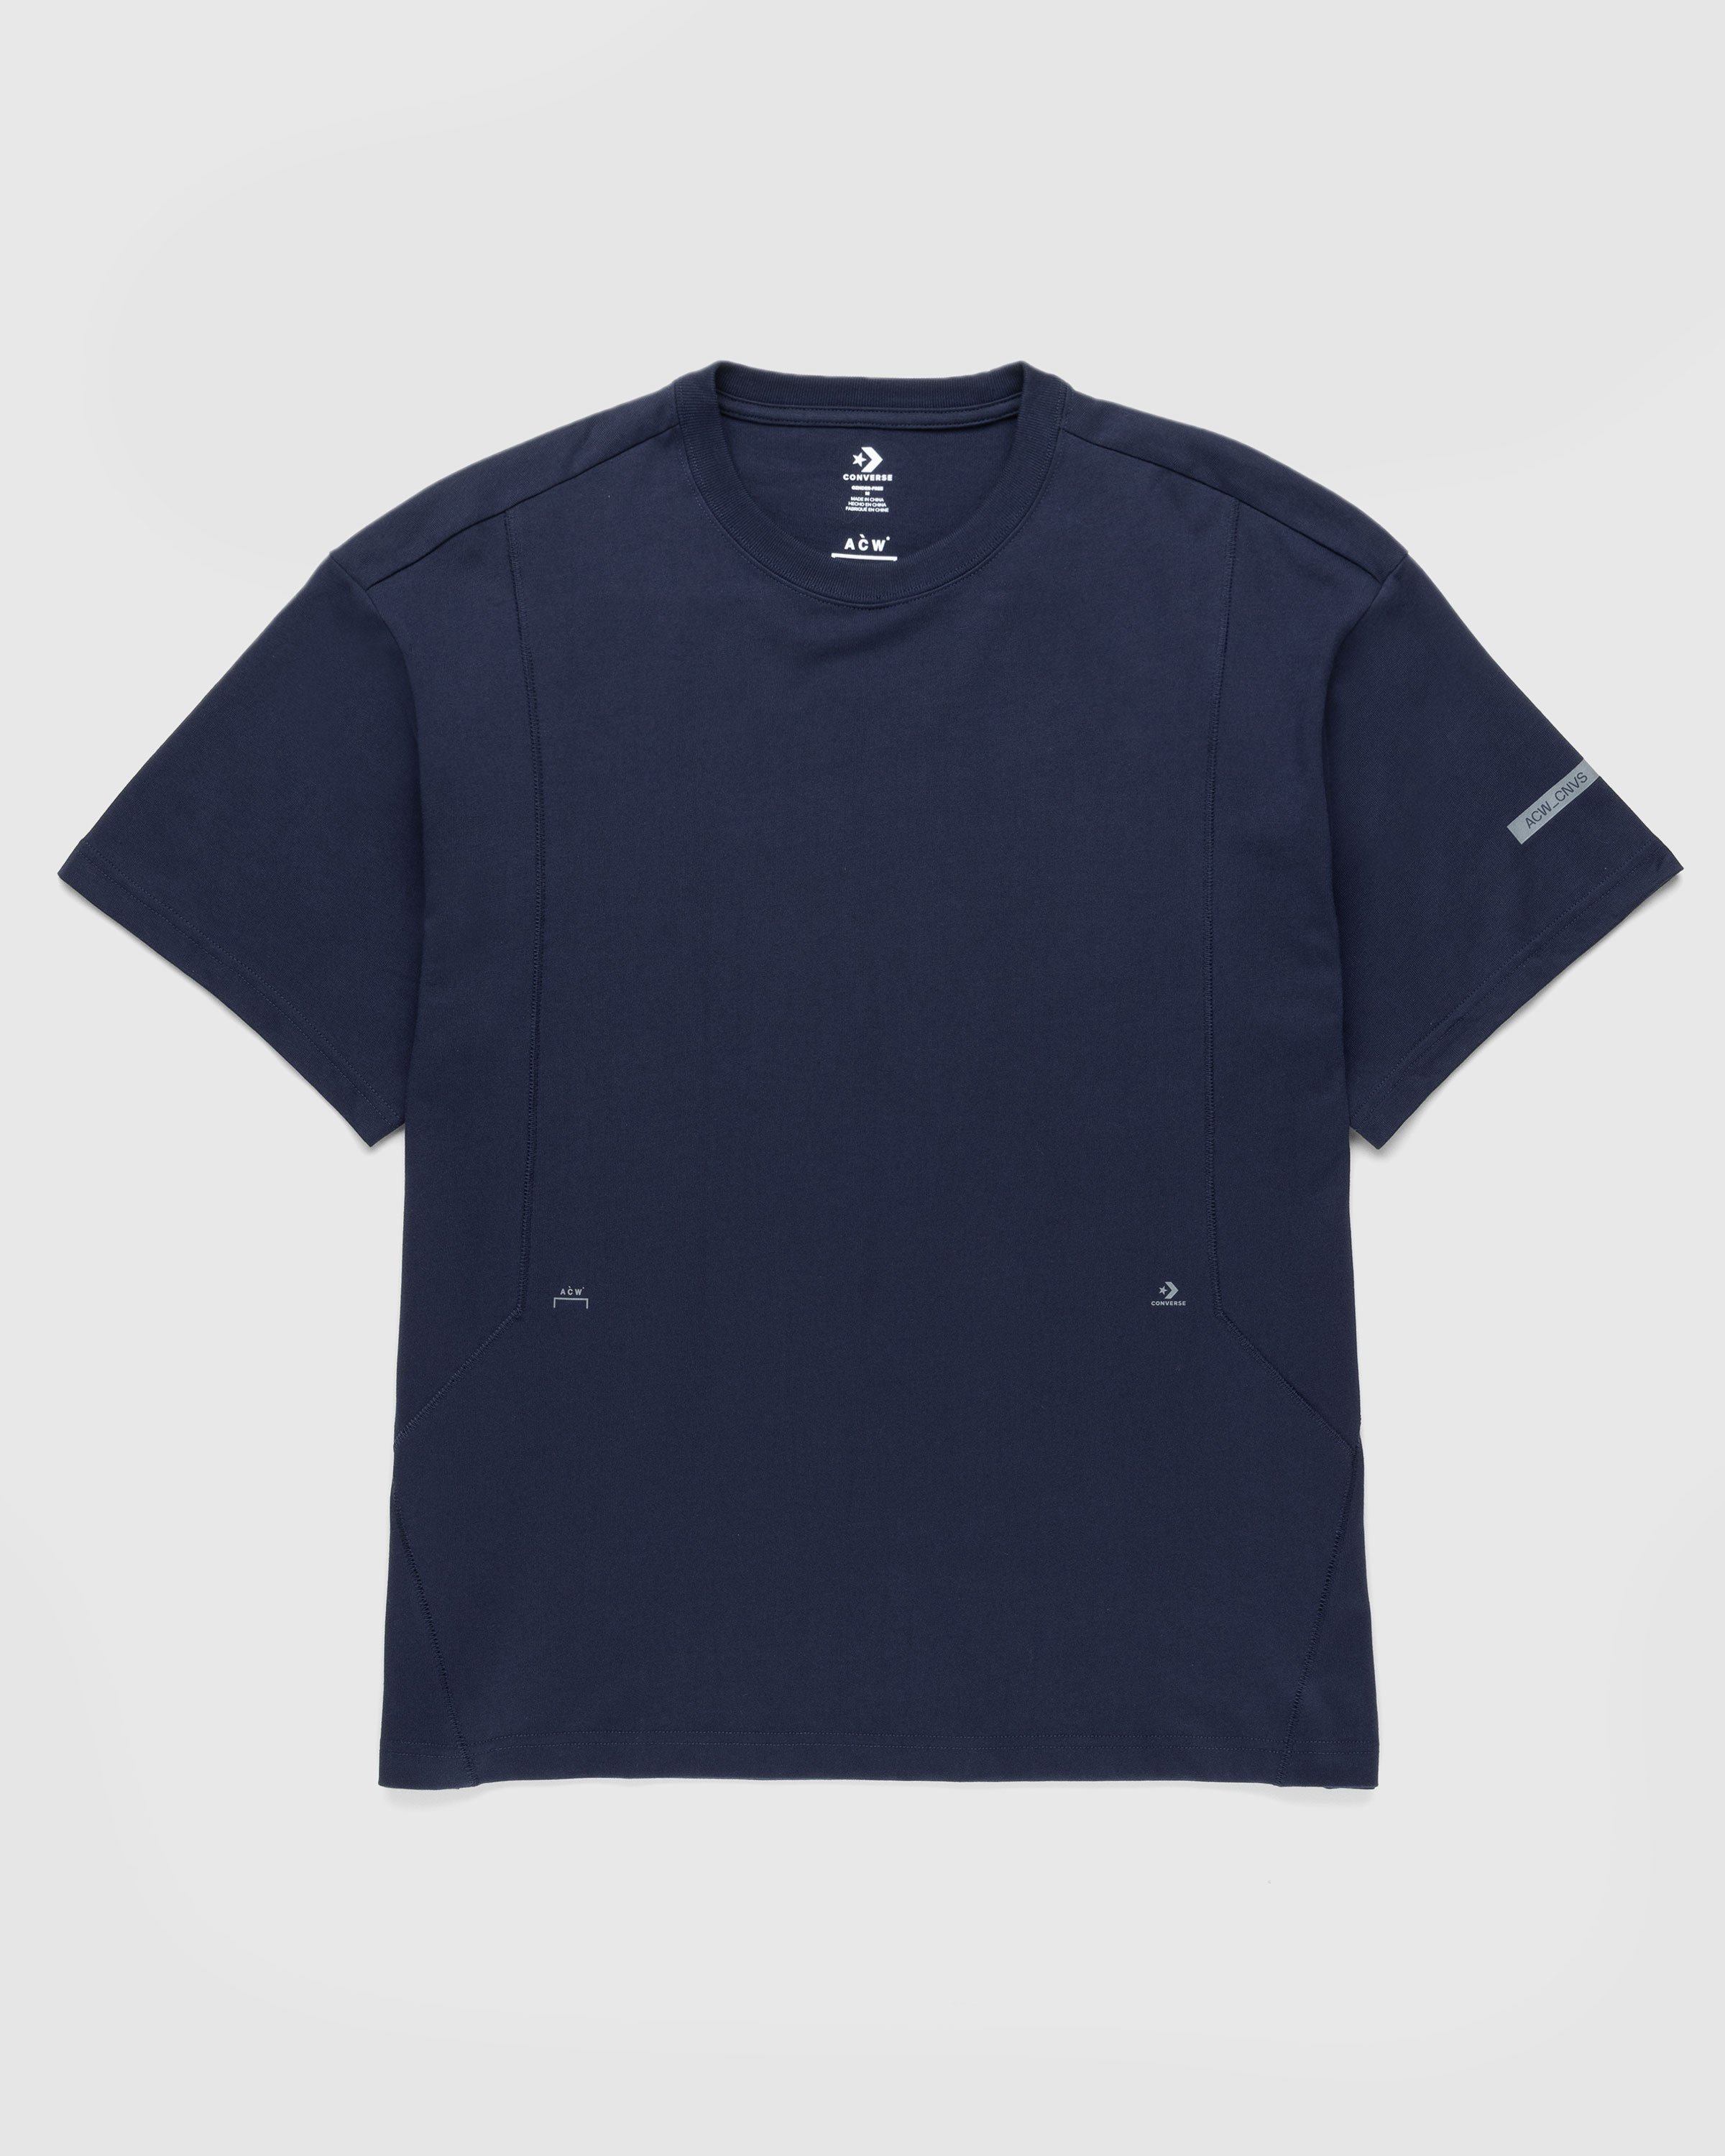 Converse x A-Cold-Wall* - Reflective T-Shirt Navy - Clothing - Blue - Image 1